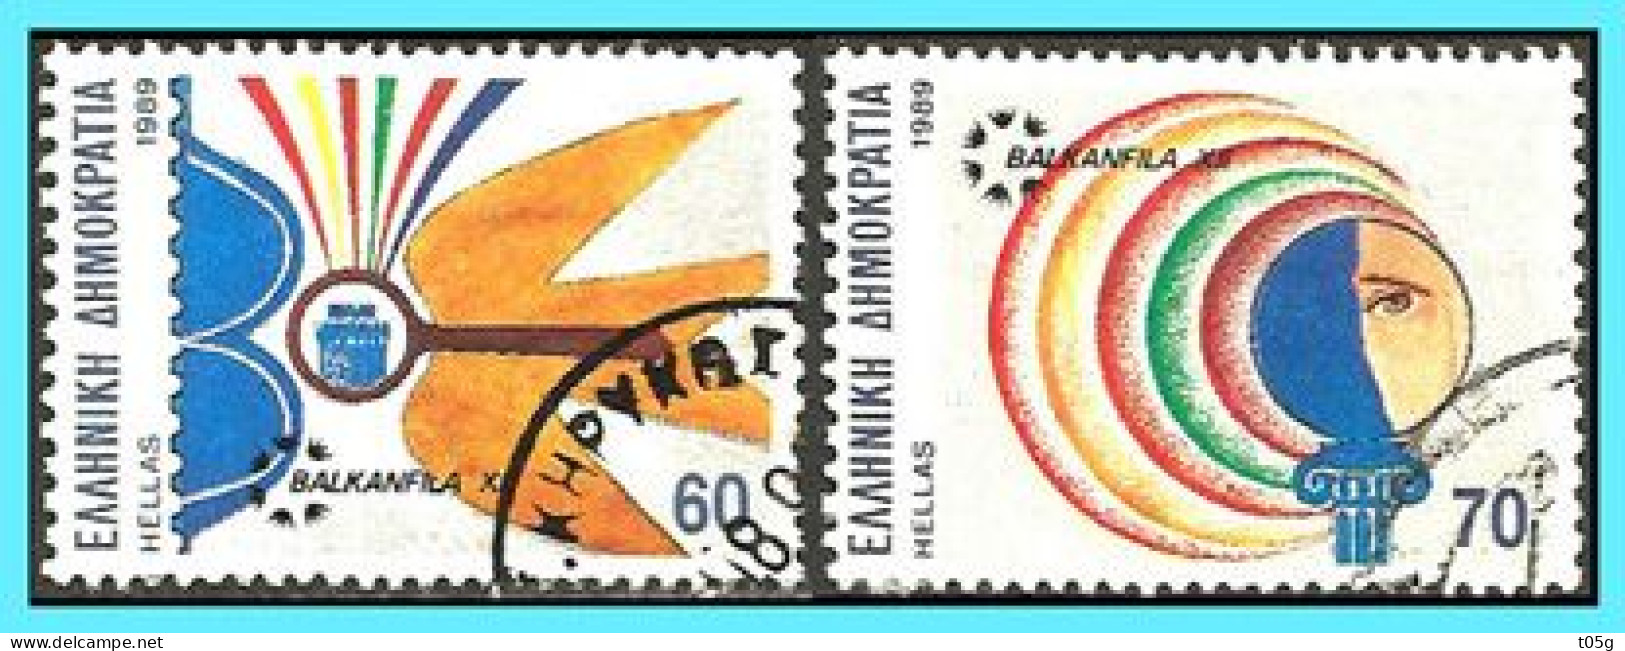 Greece- Grece -Hellas 1989:  BALKANOFILA 89" - Compl. Set- Used - Used Stamps